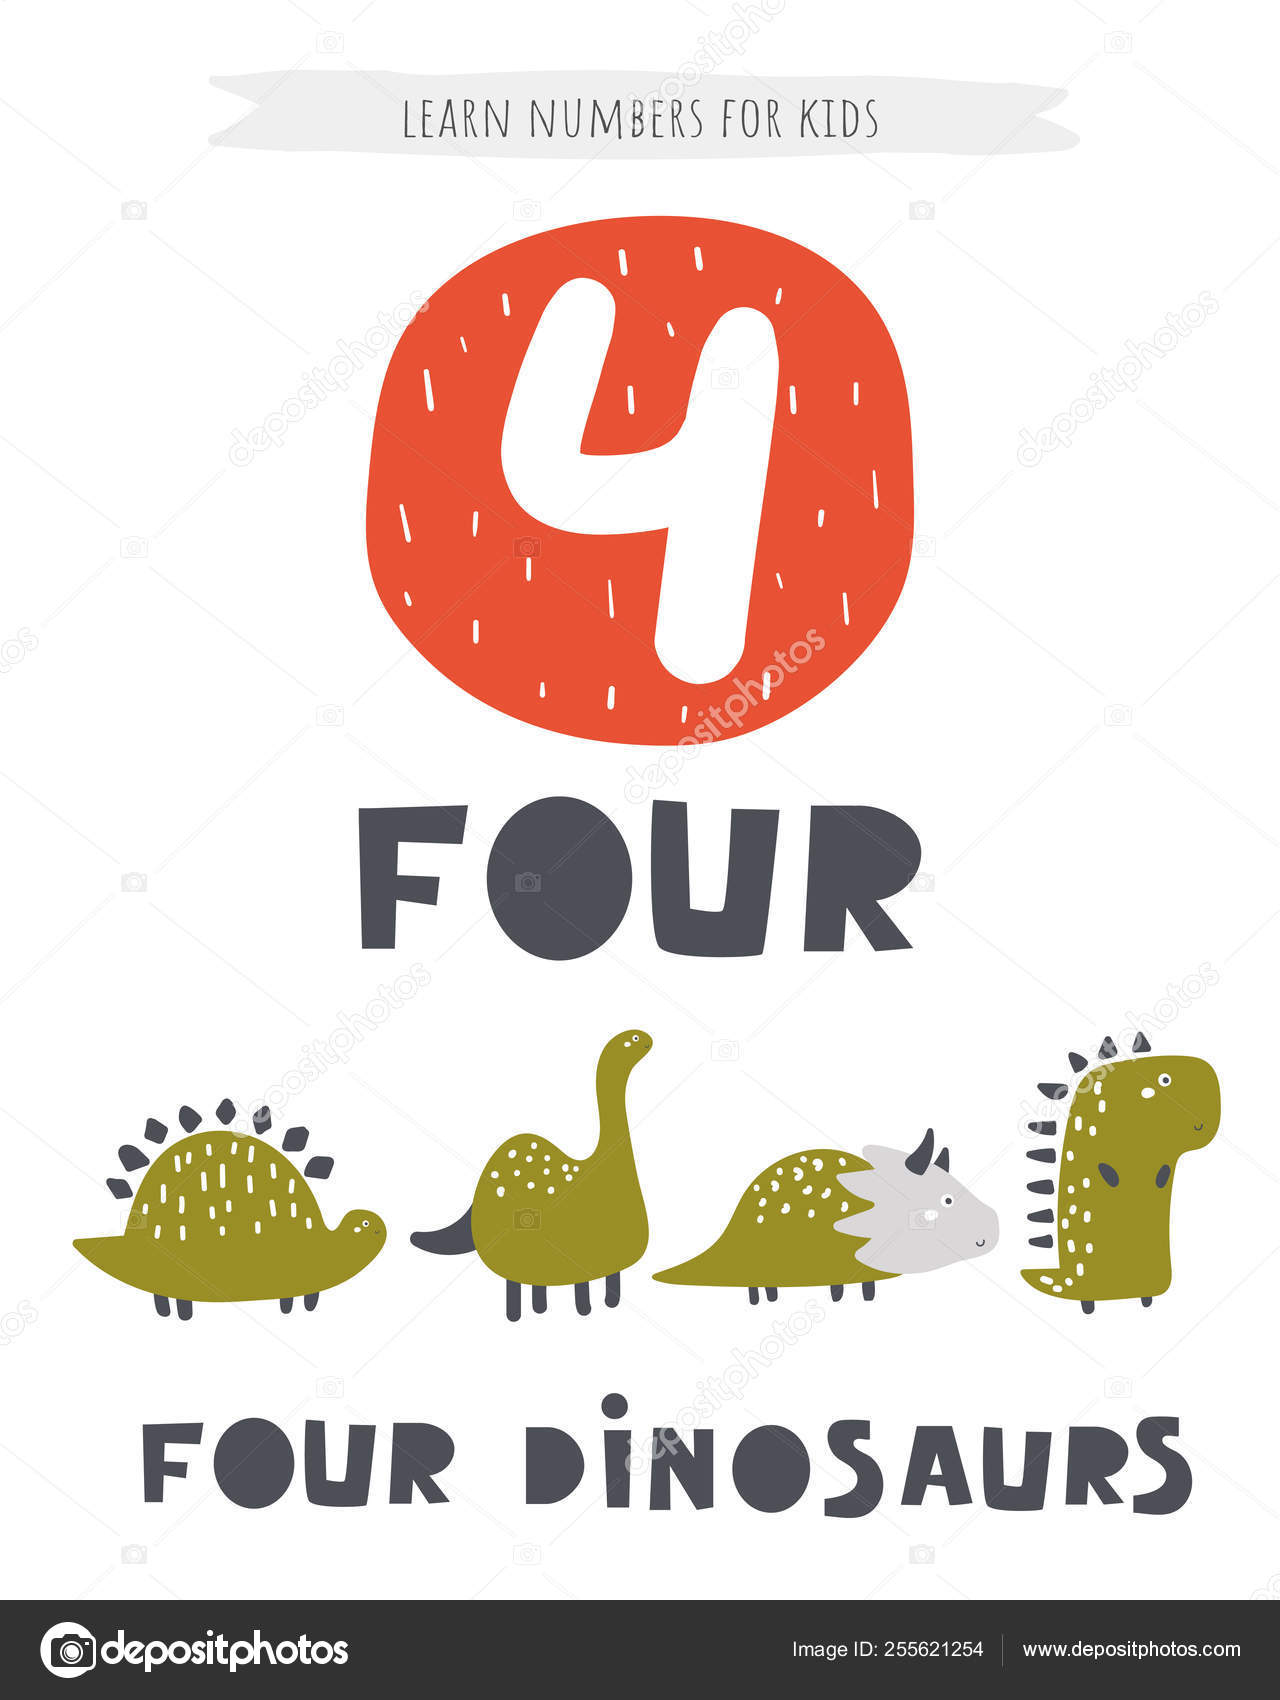 Conjunto de 4 Pôsteres Dinossauros Silhueta - Miüdo